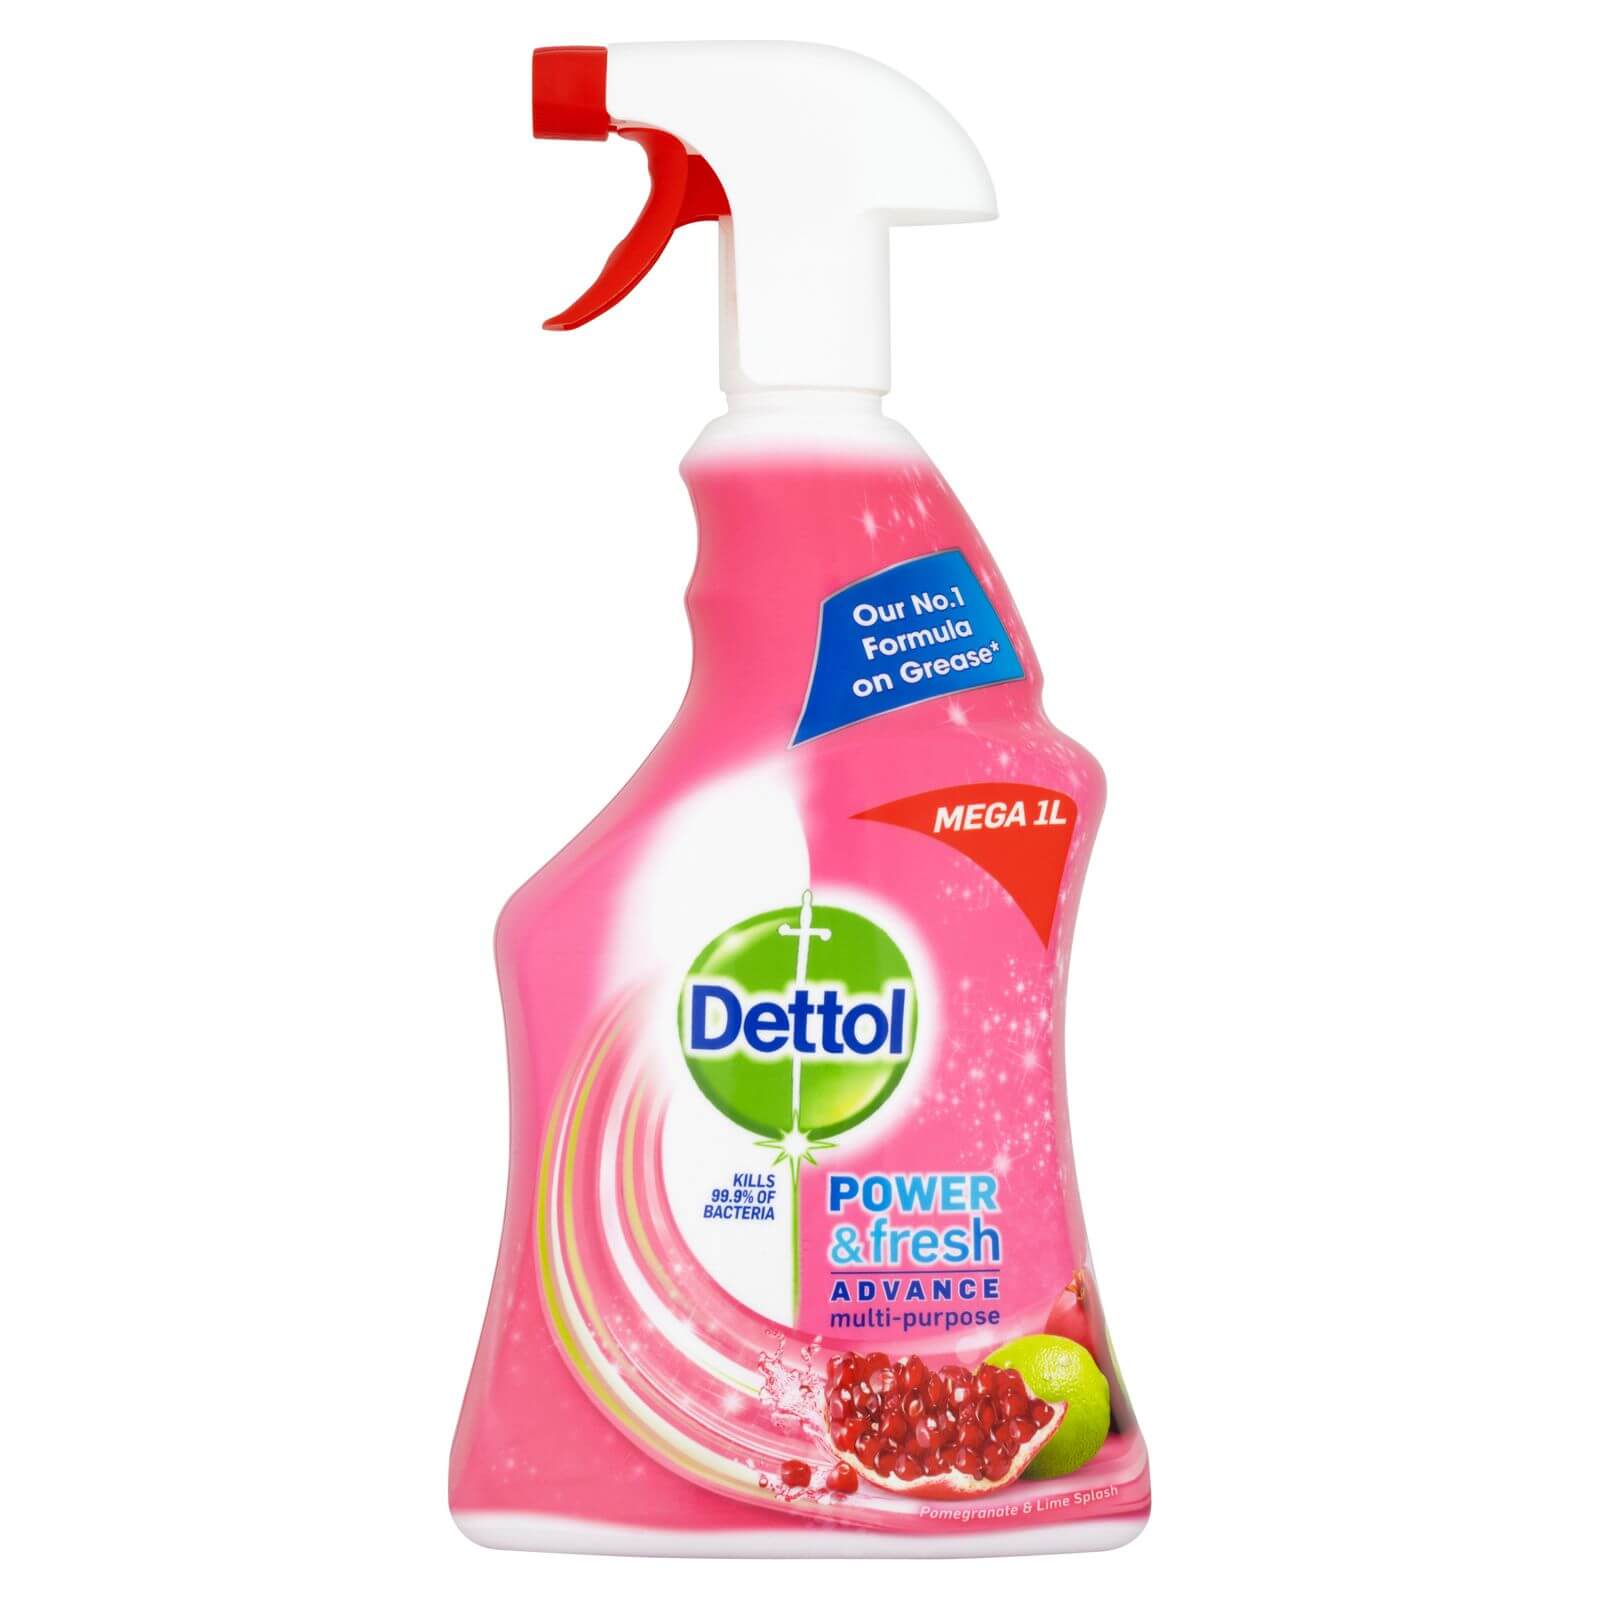 Dettol Power & Fresh Anti Bacterial Trigger Spray Cleaner - Pomegranate